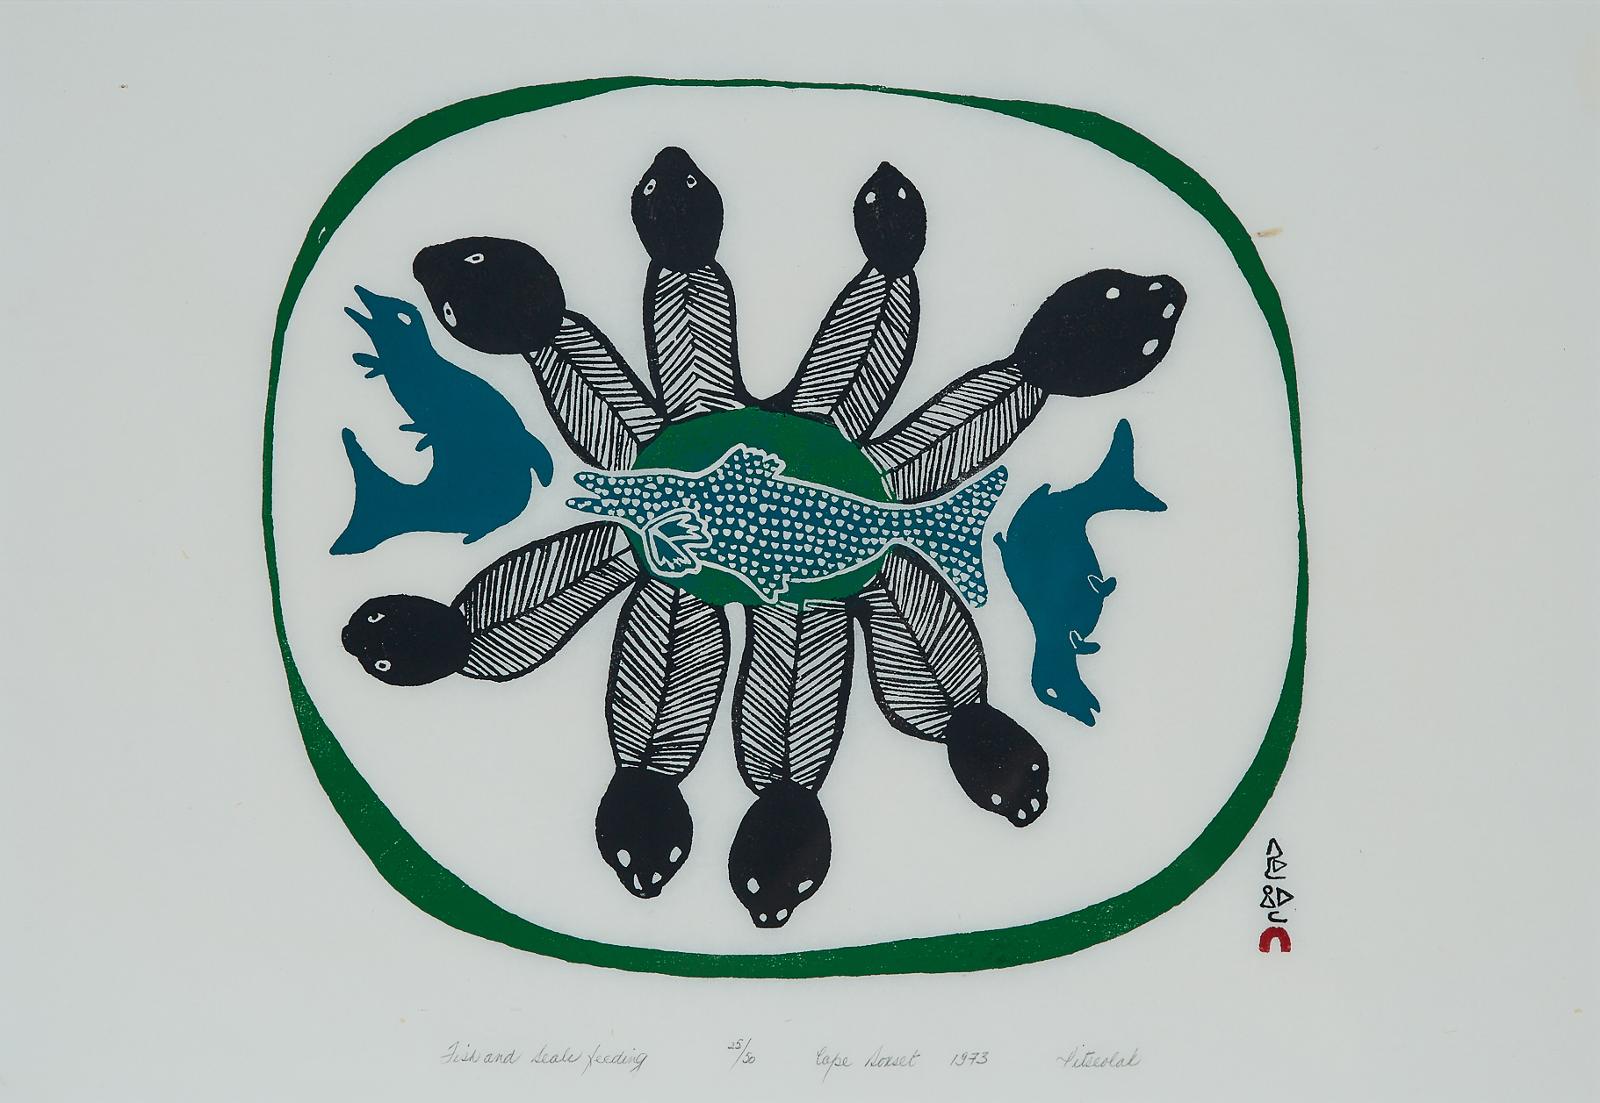 Pitseolak Ashoona (1904-1983) - Fish And Seals Feeding